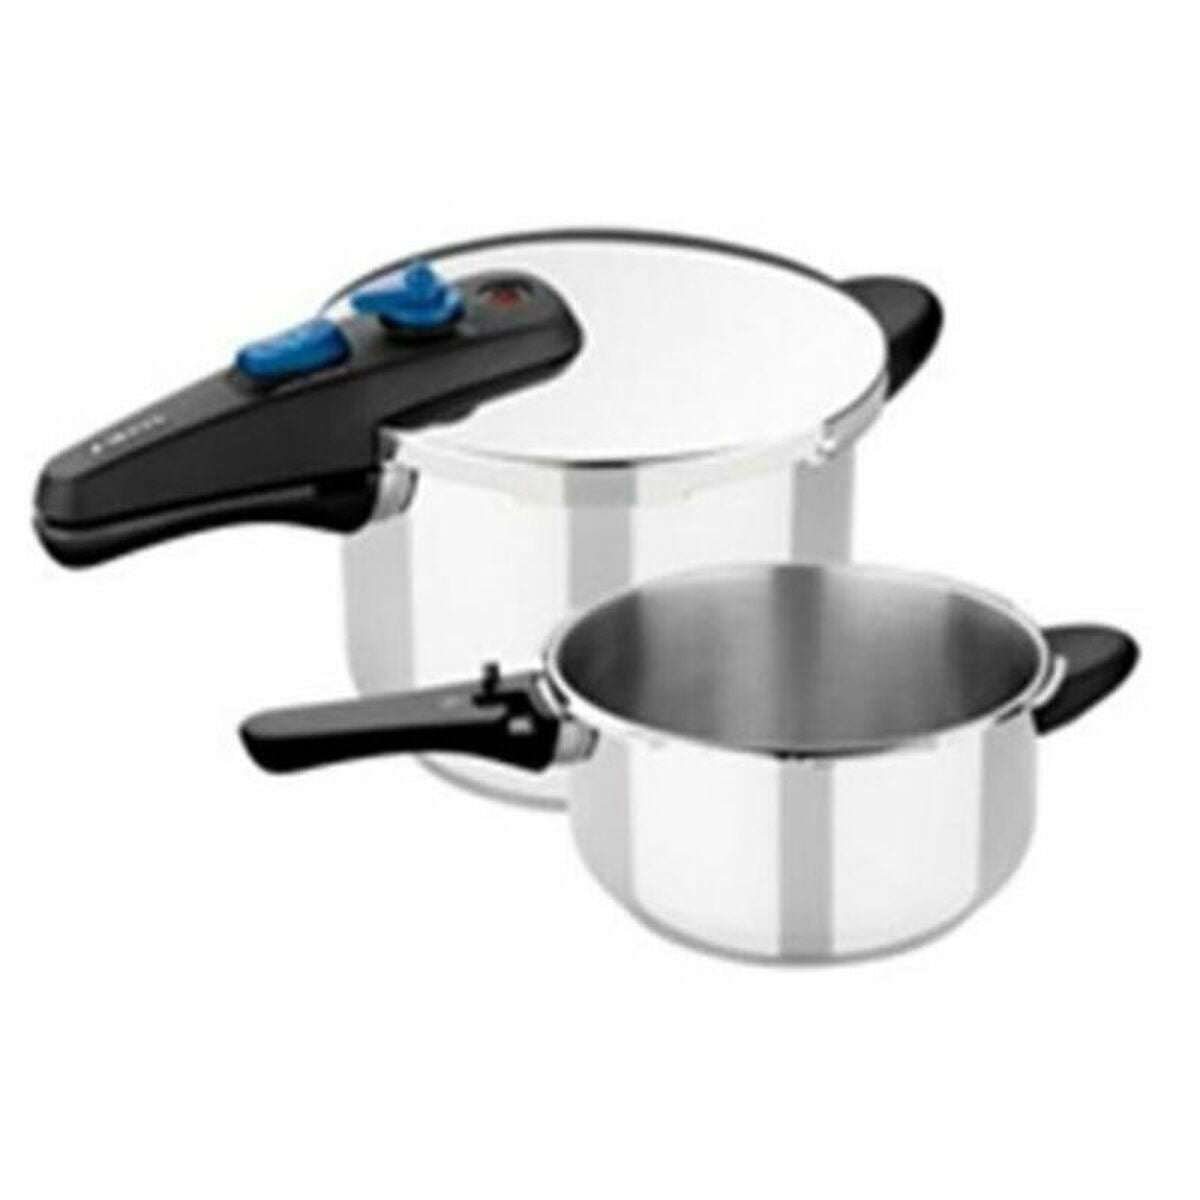 Pressure cooker Monix M570005 (2 pcs) Stainless steel 6 L